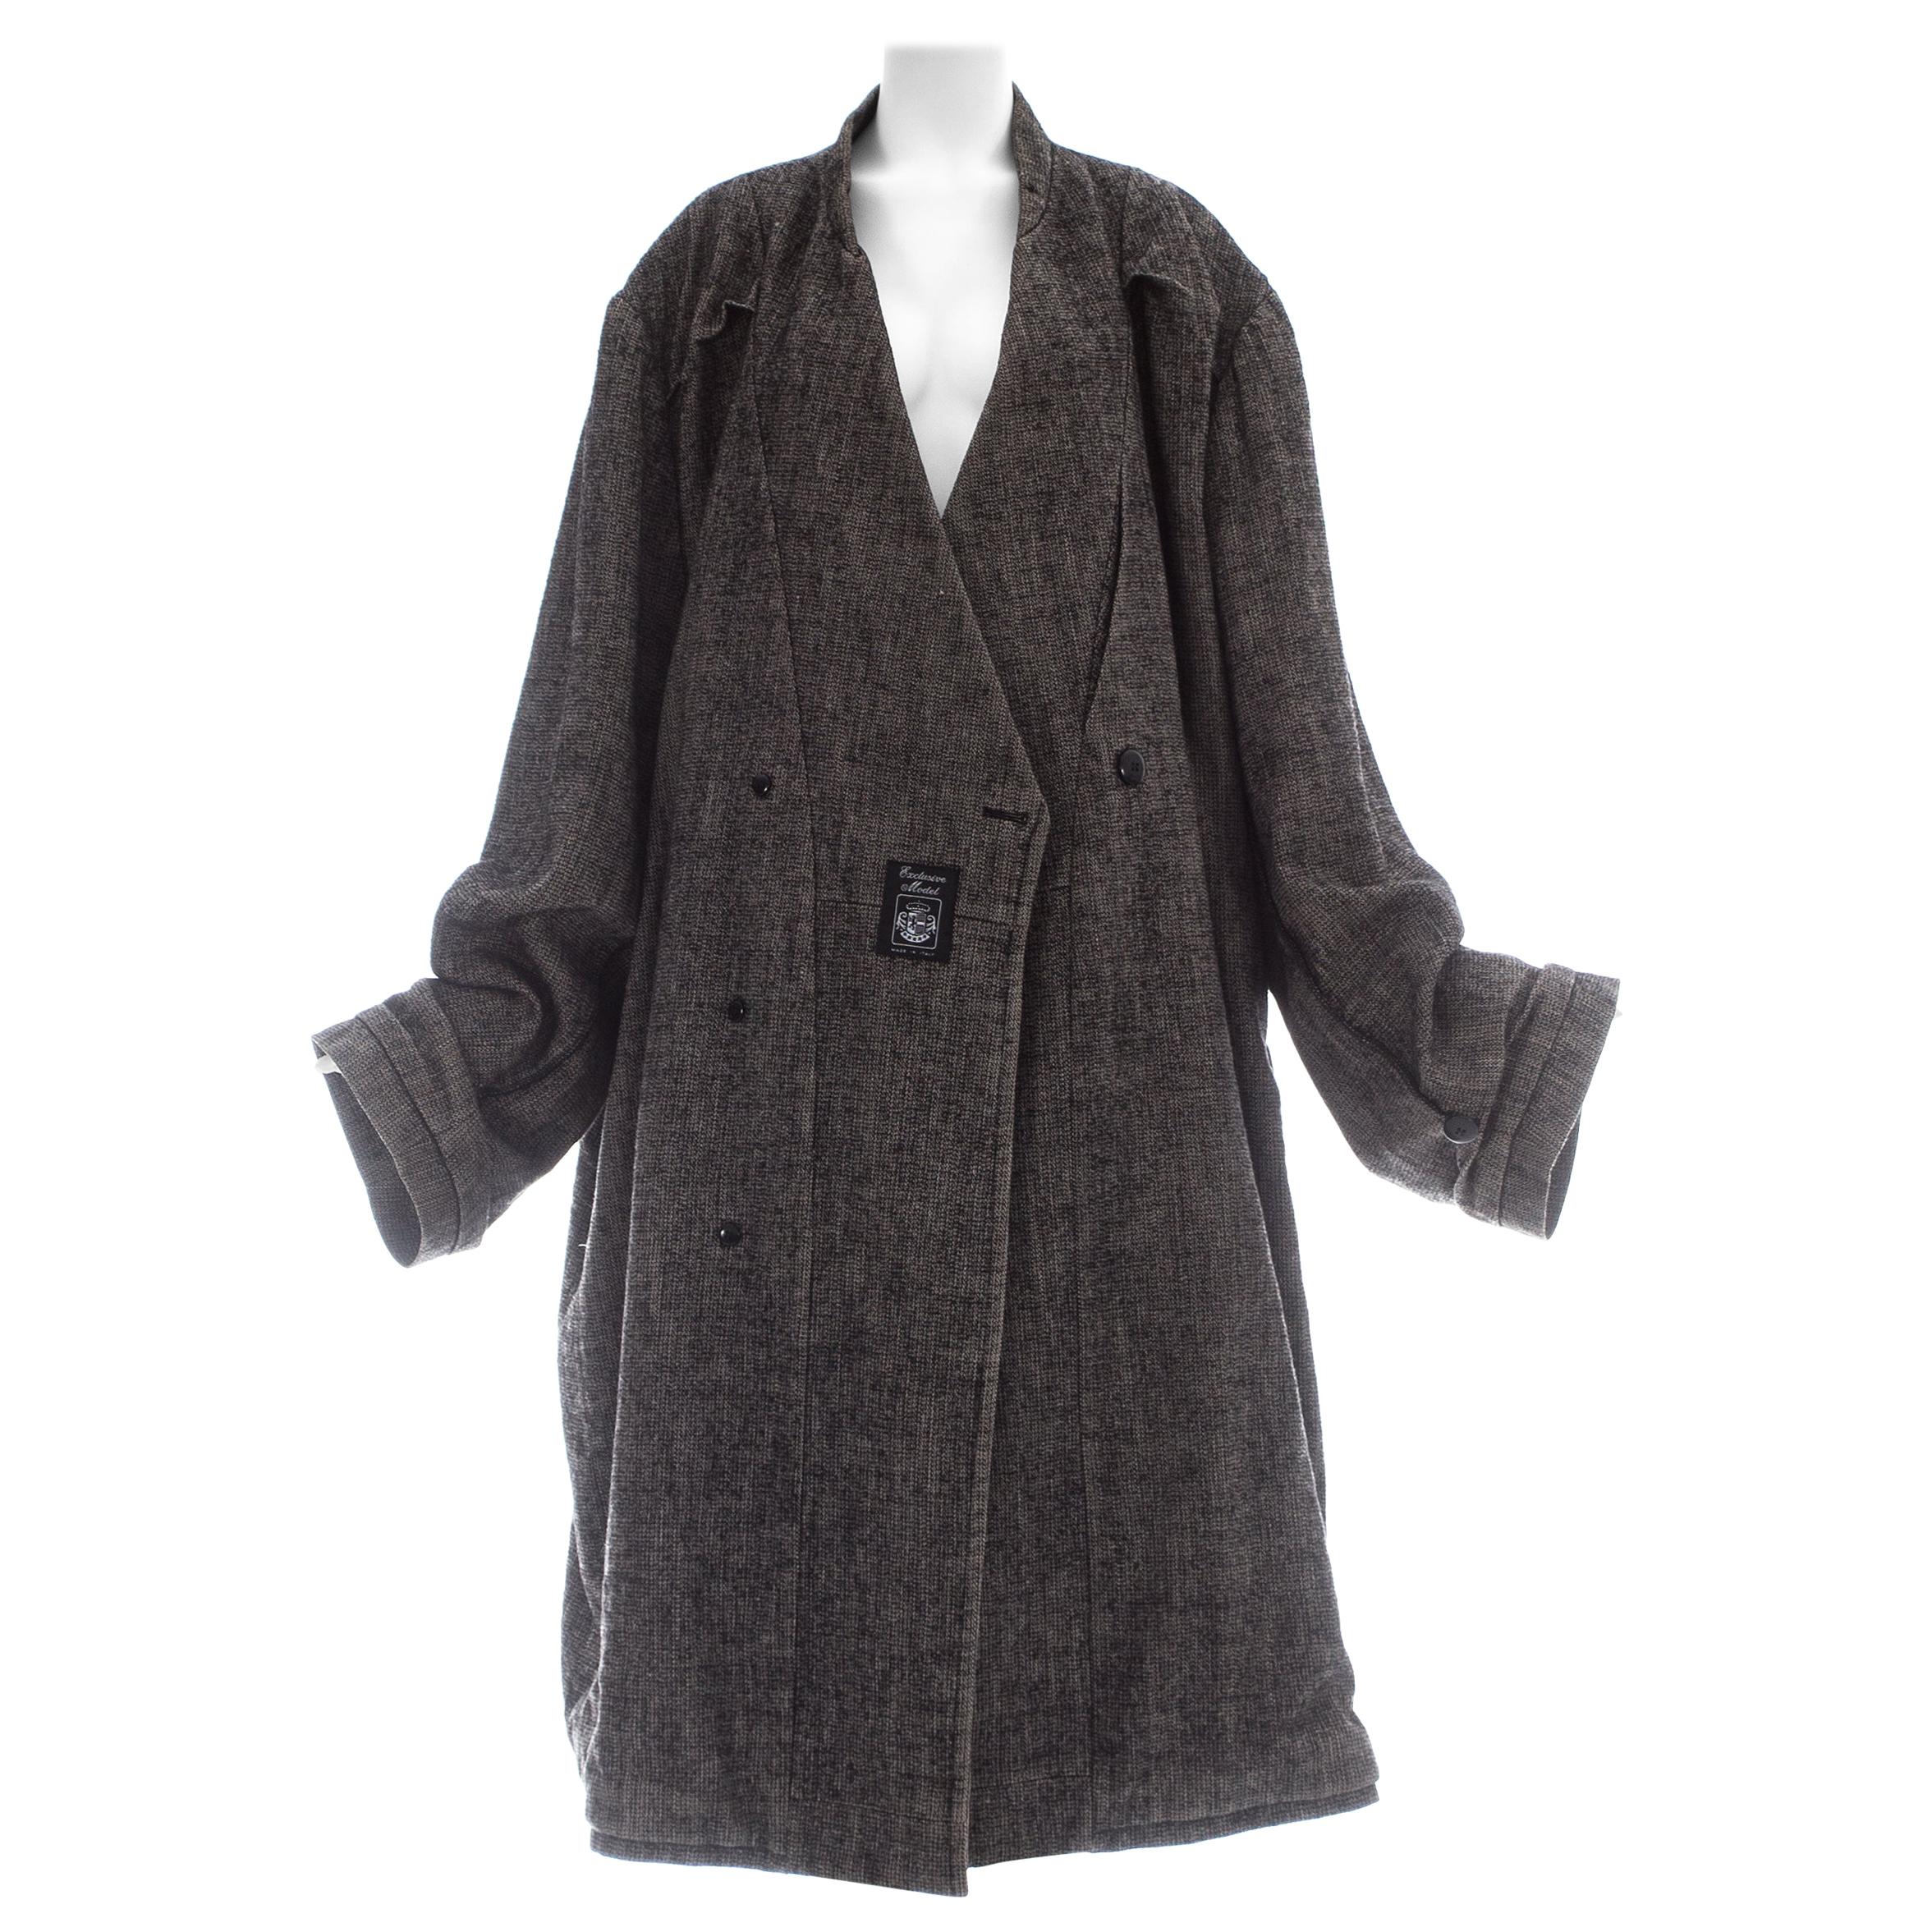 Martin Margiela grey wool and linen XXL size 78 double inside coat, fw 2000